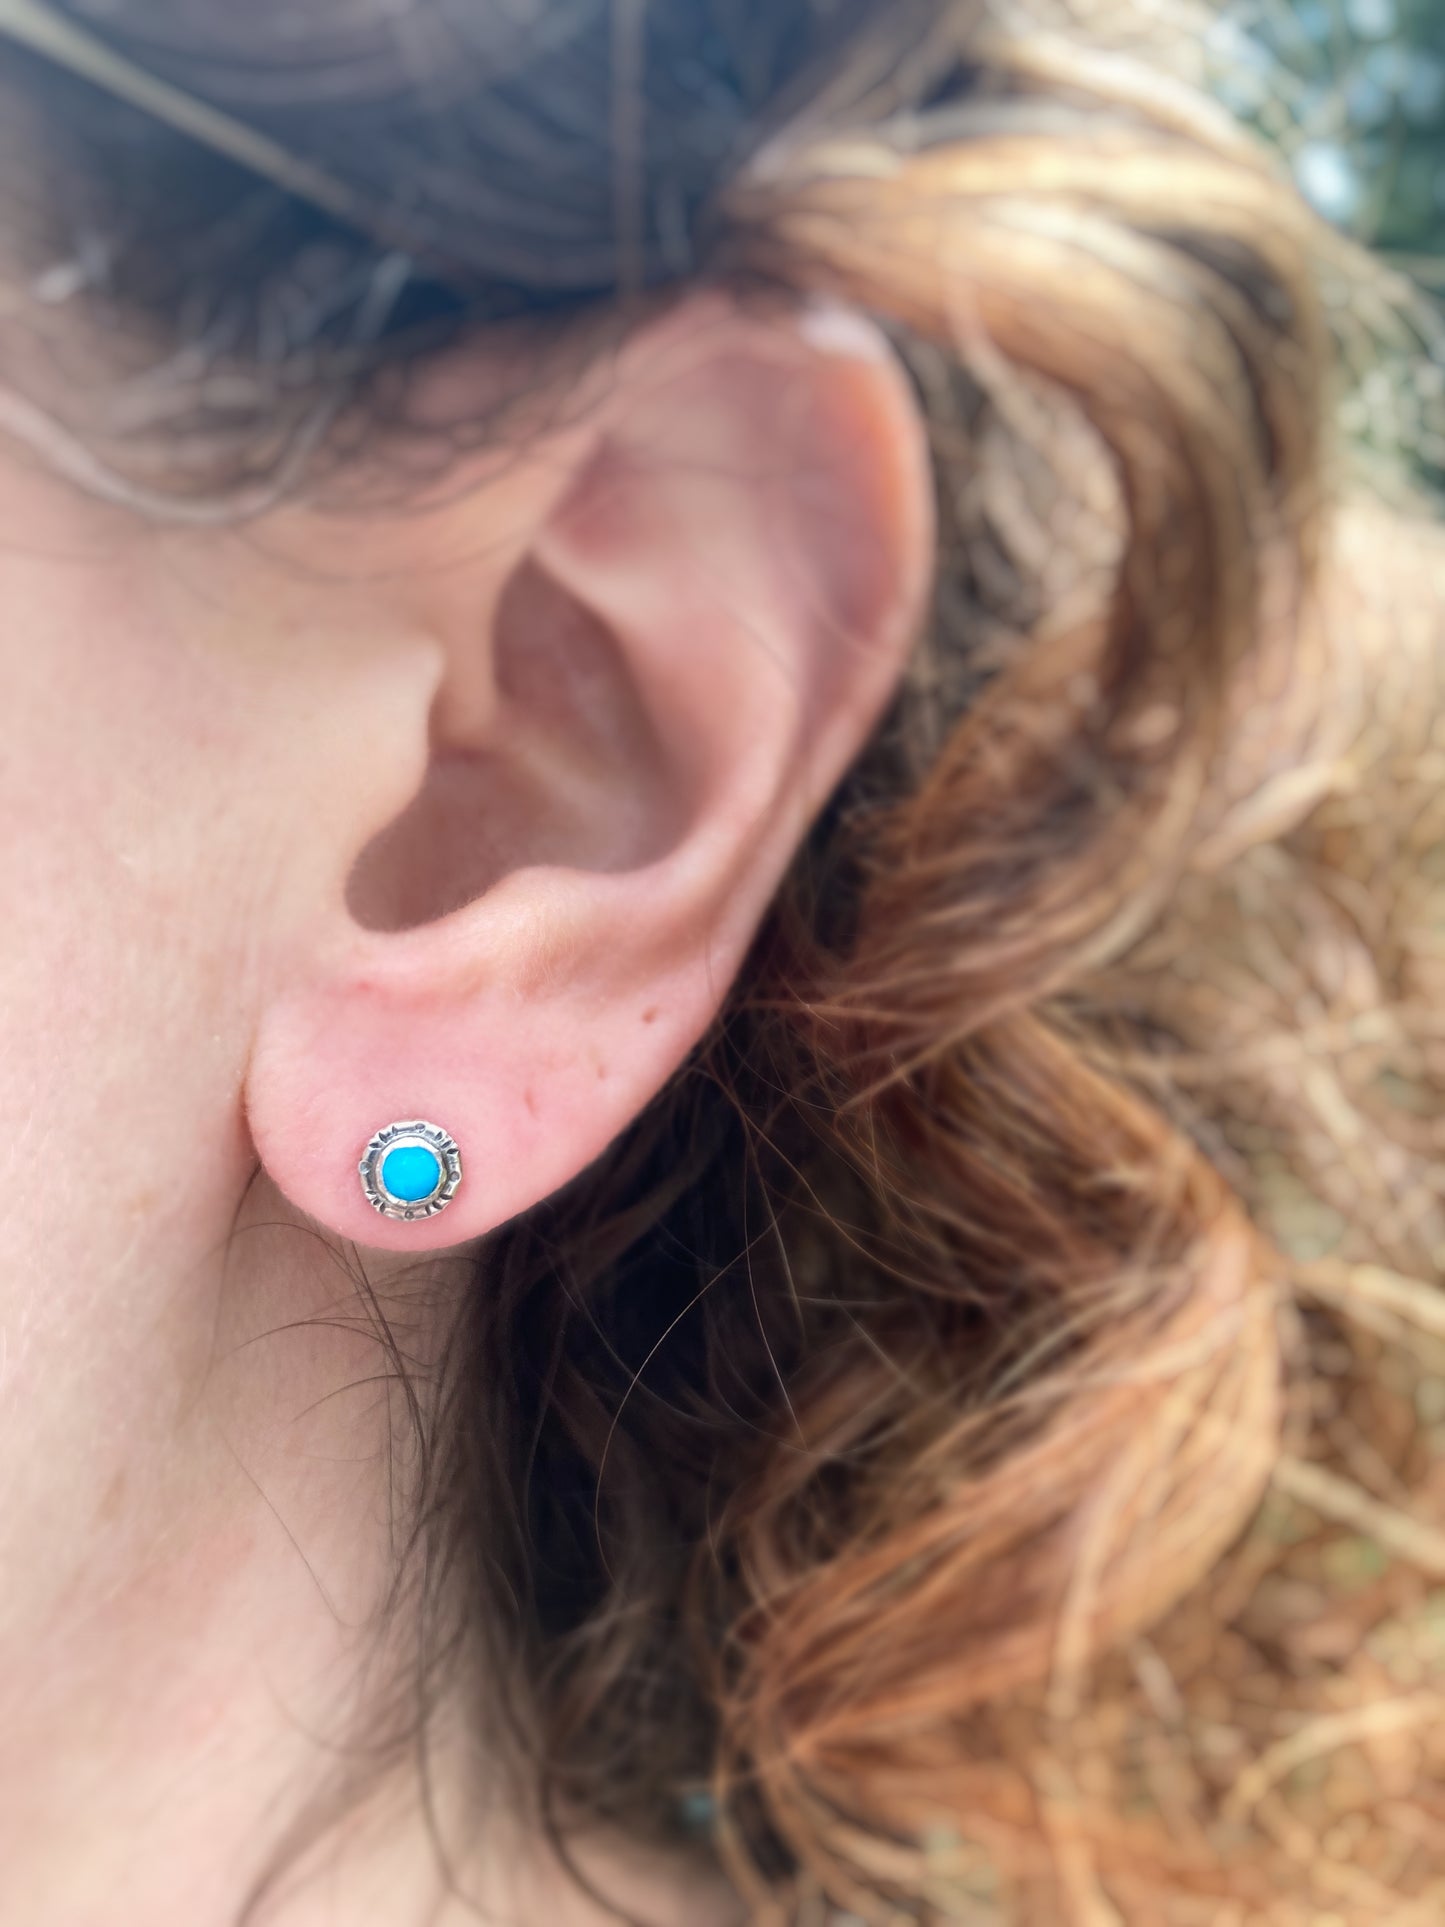 Turquoise Stud Earrings in Sterling Silver